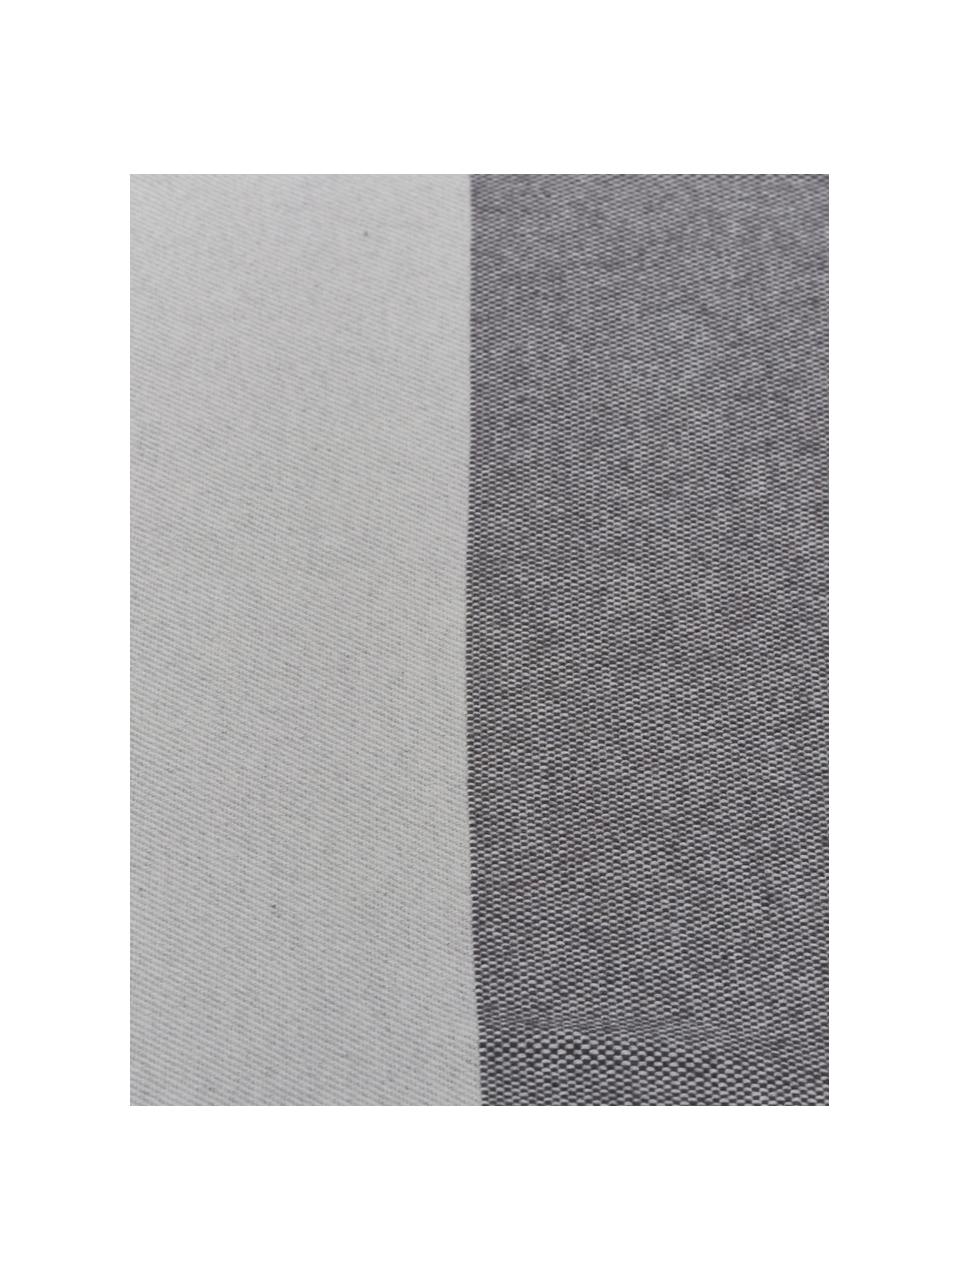 Manta Stripes, 50% algodón, 50% poliacrílico, Gris, An 150 x L 200 cm